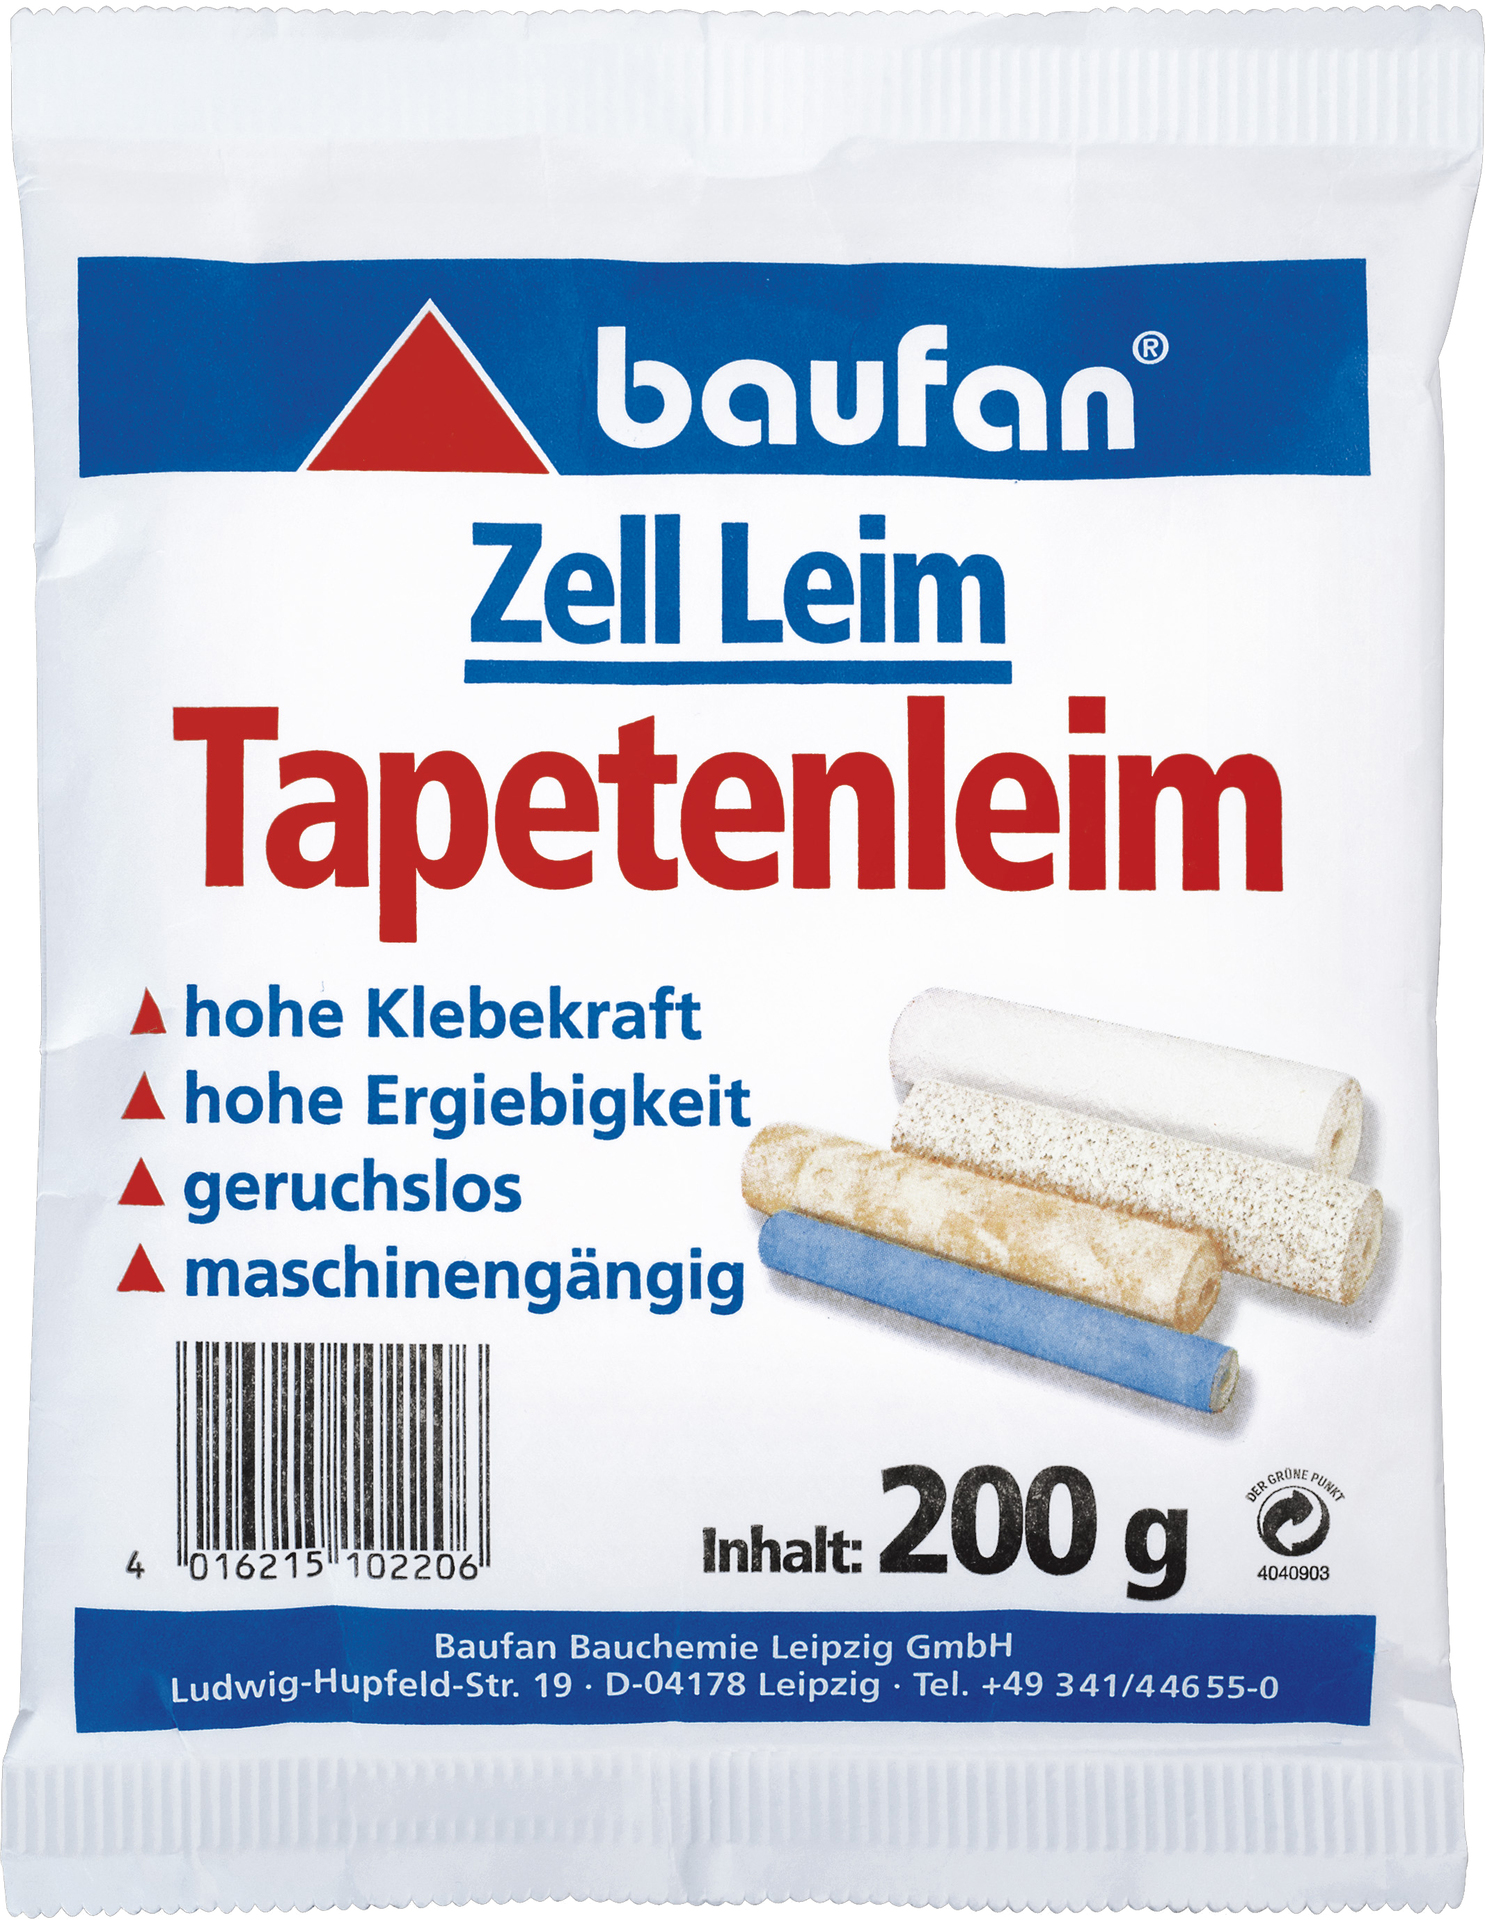 Baufan Bauchemie Leipzig GmbH Baufan Tapetenleim